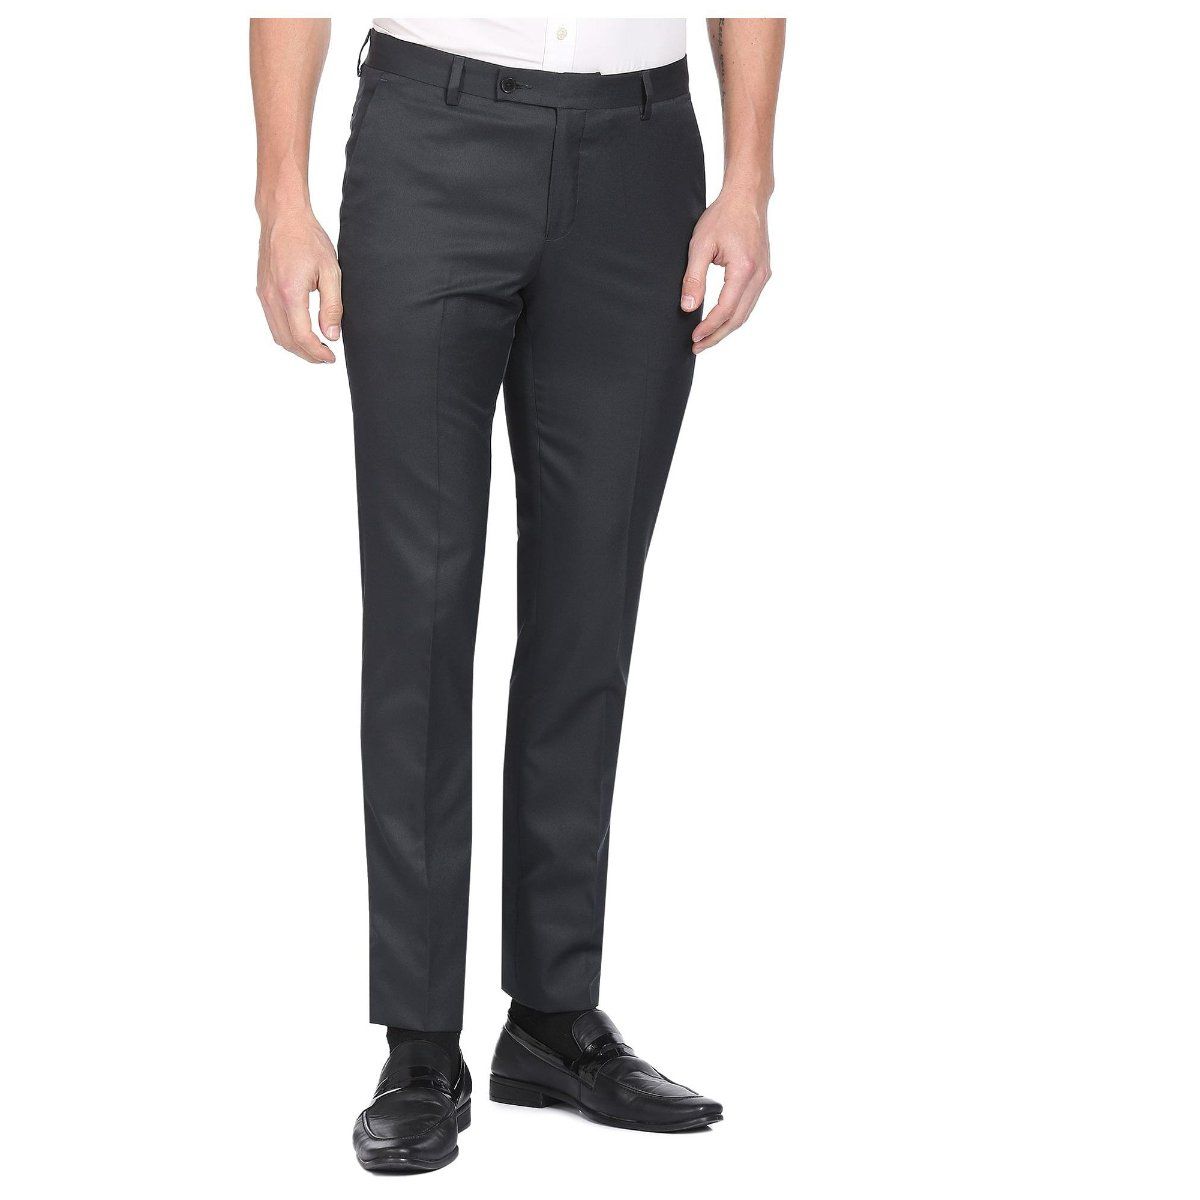 Buy Dark Grey Trousers  Pants for Men by ARROW Online  Ajiocom